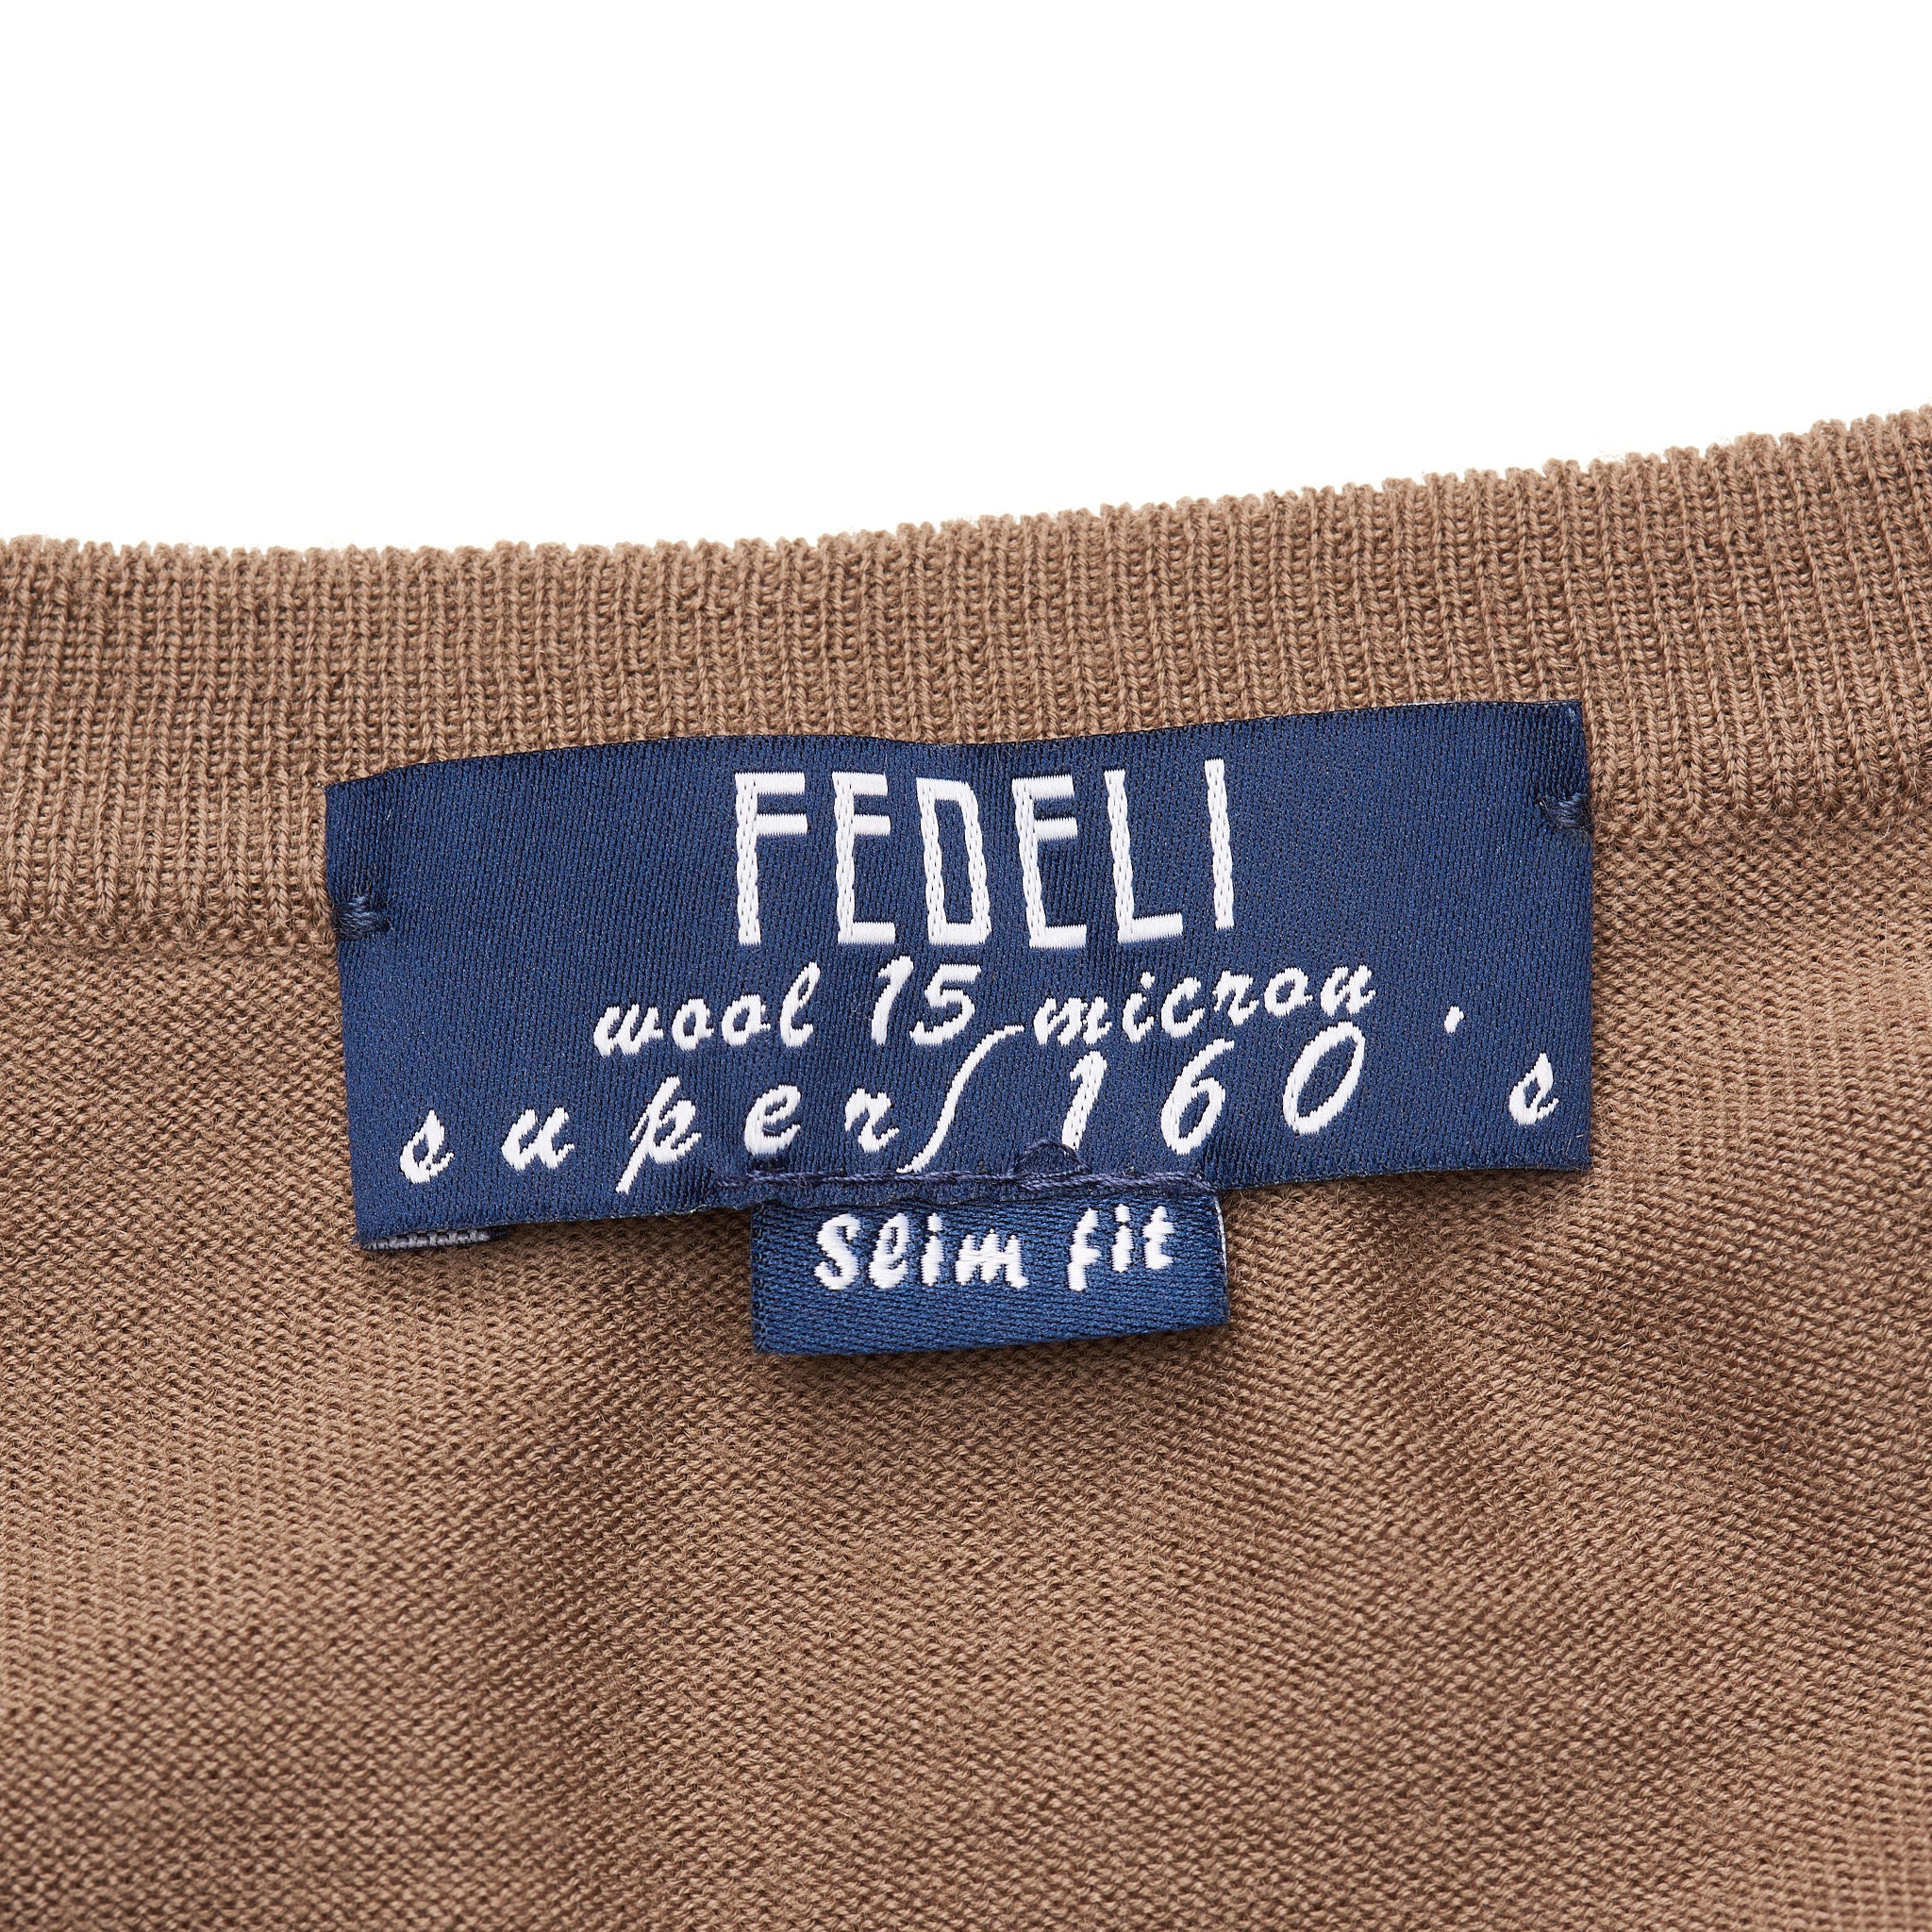 FEDELI Brown 15 Micron Wool Super 160's V-Neck Sweater EU 50 NEW US M